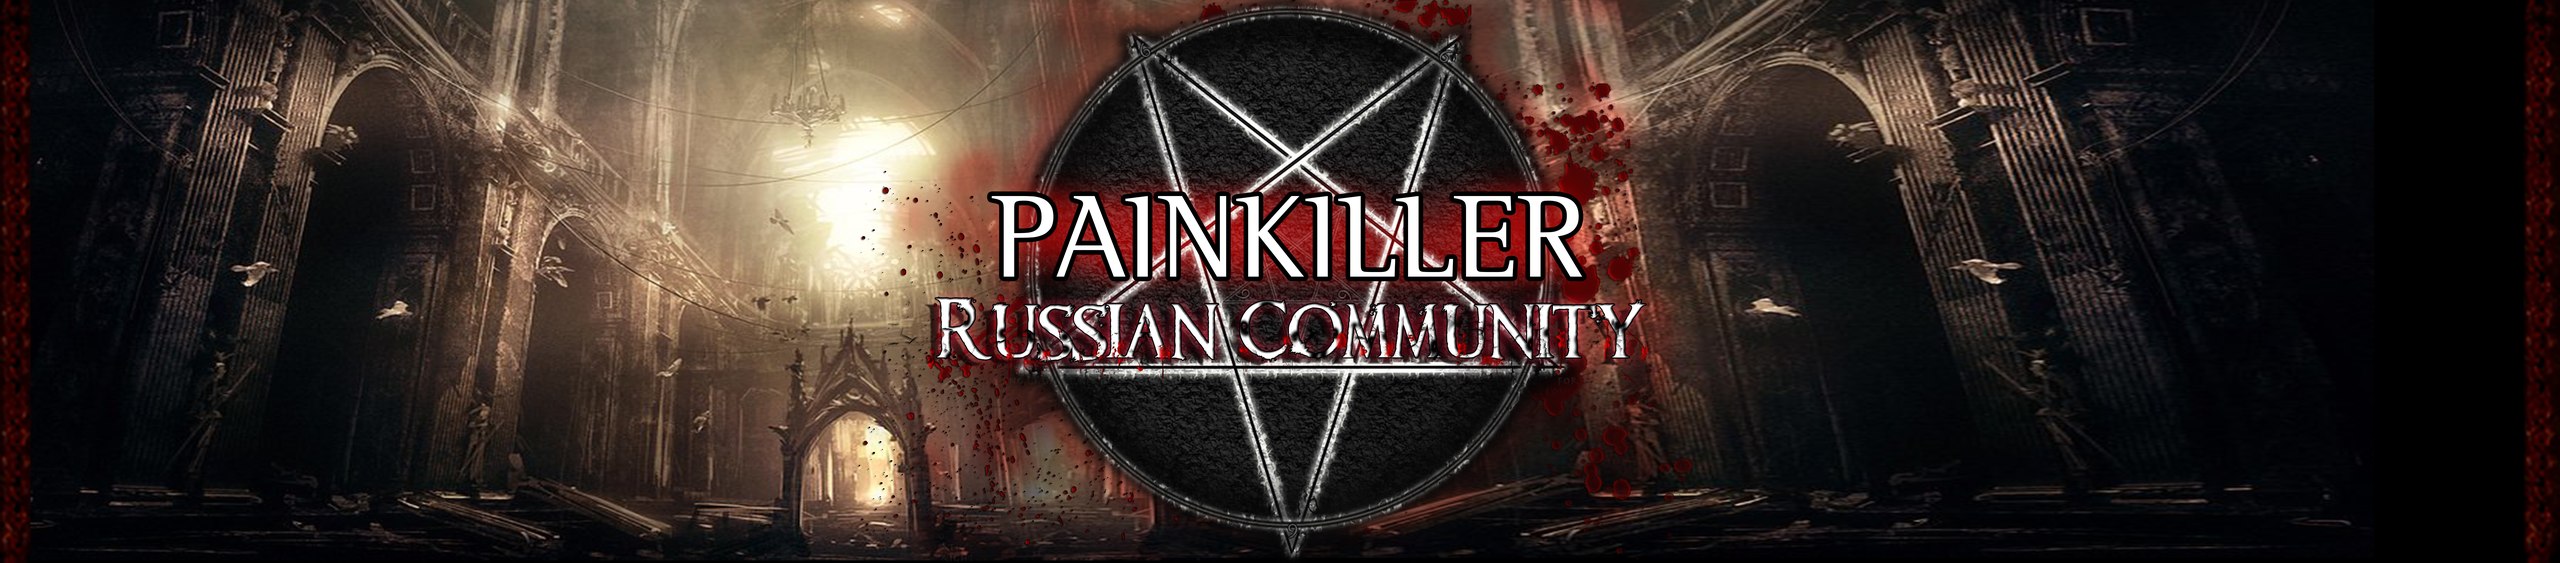 Painkiller Russian community